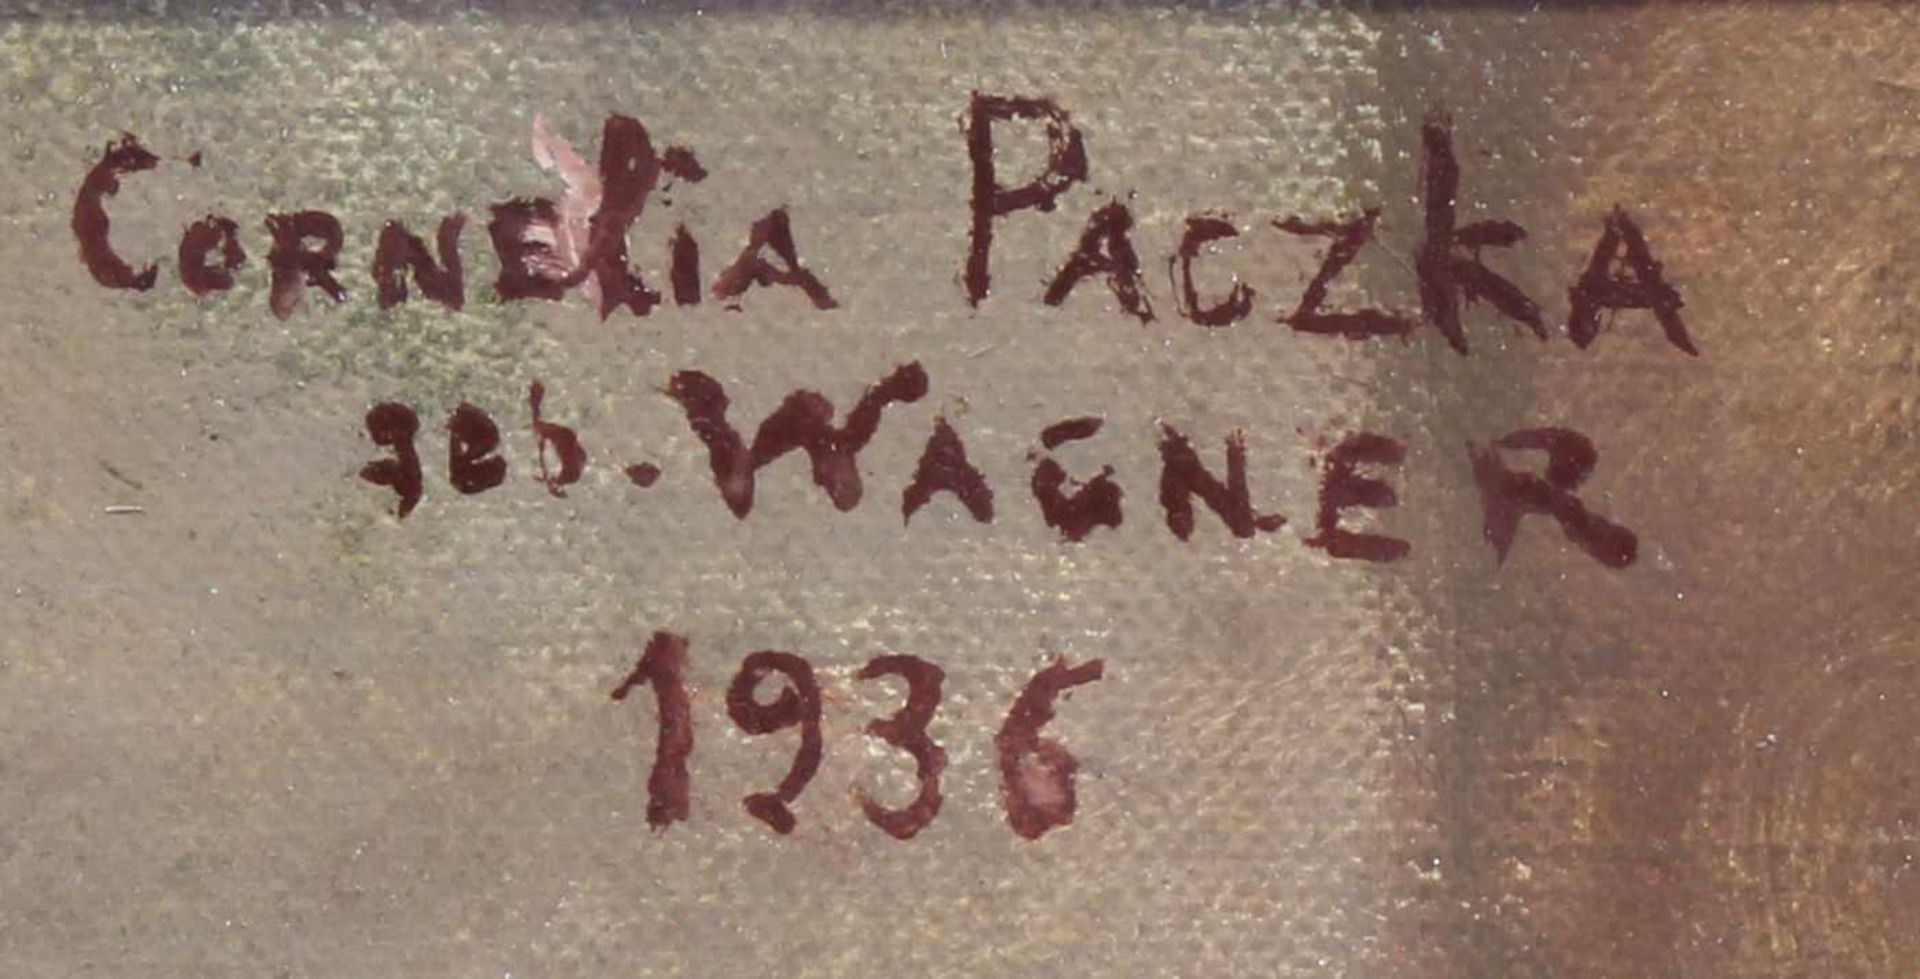 Paczka, Cornelia (1864 Göttingen - ca. 1930, studierte in Berlin bei K. Stauffer-Bern und in München - Image 6 of 8